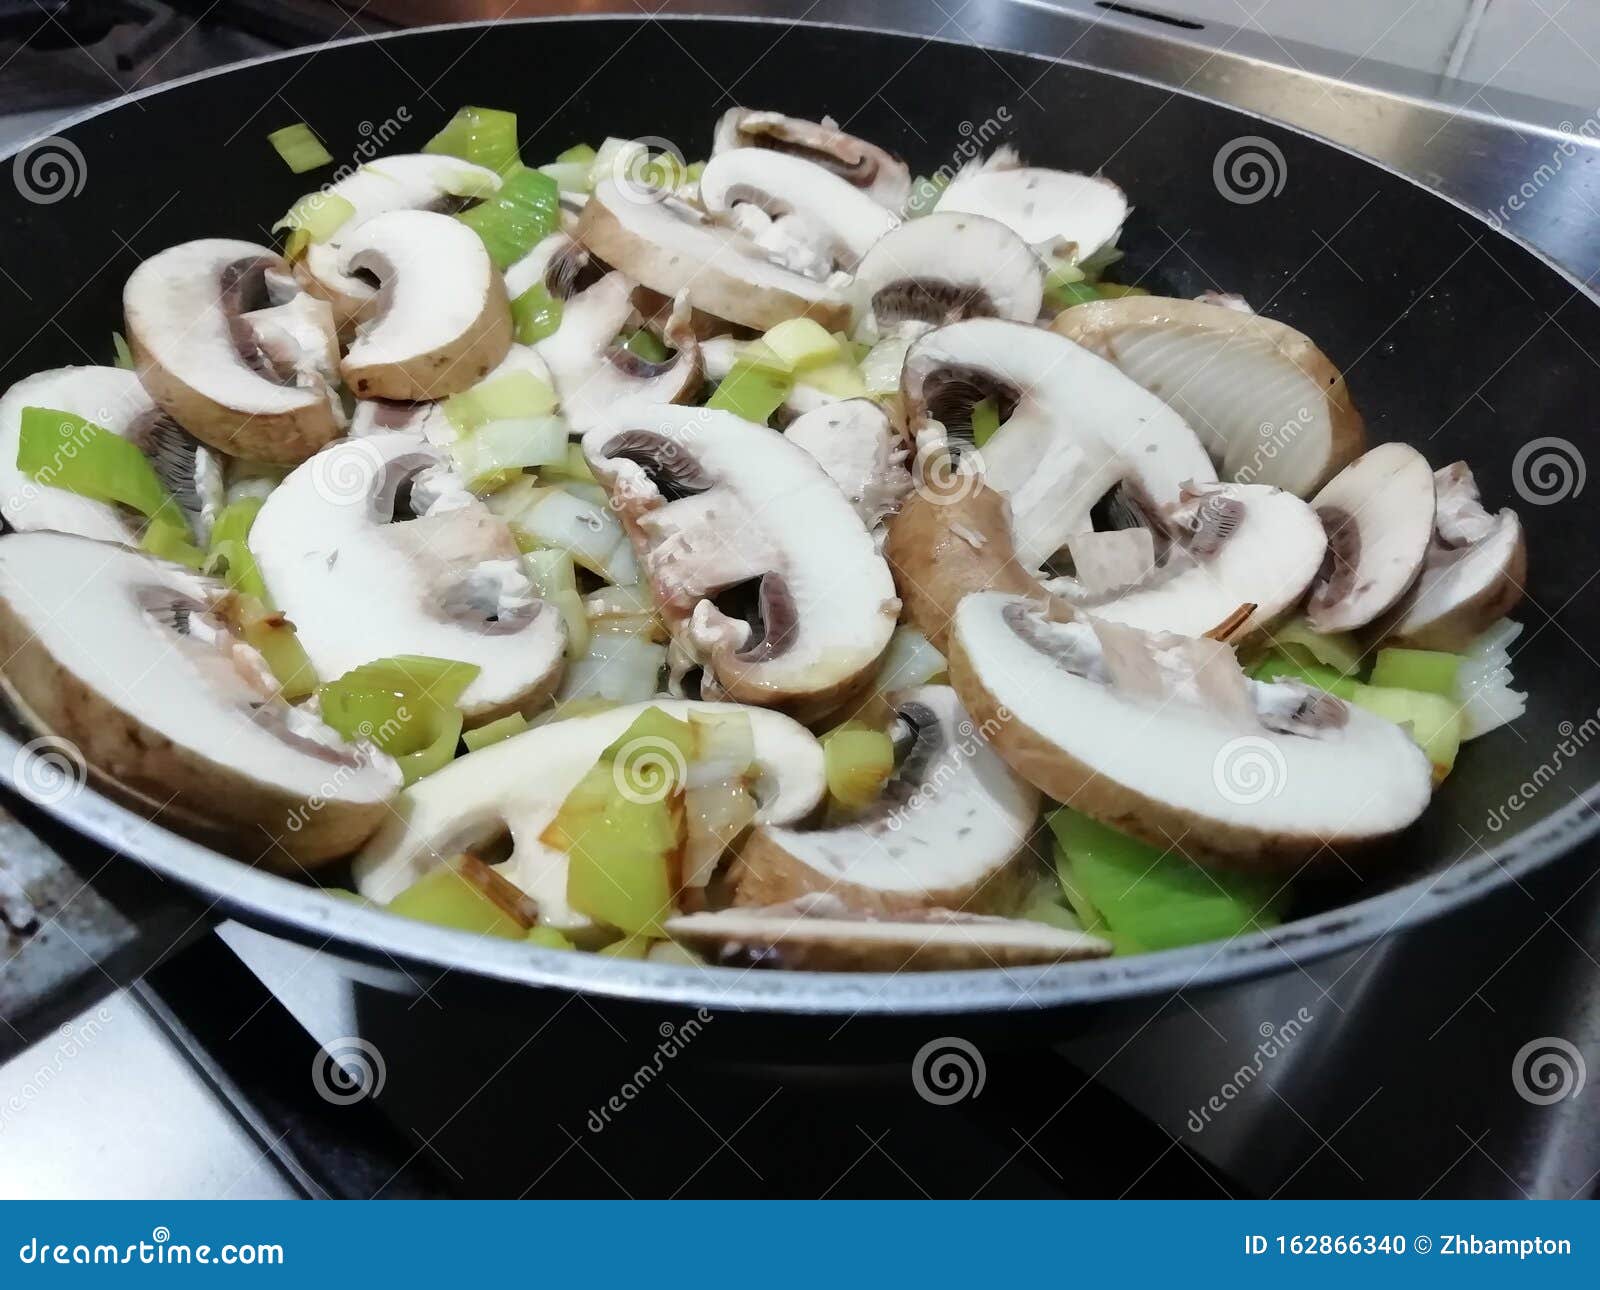 Mushrooms and leeks stock photo. Image of fresh, cooking - 162866340